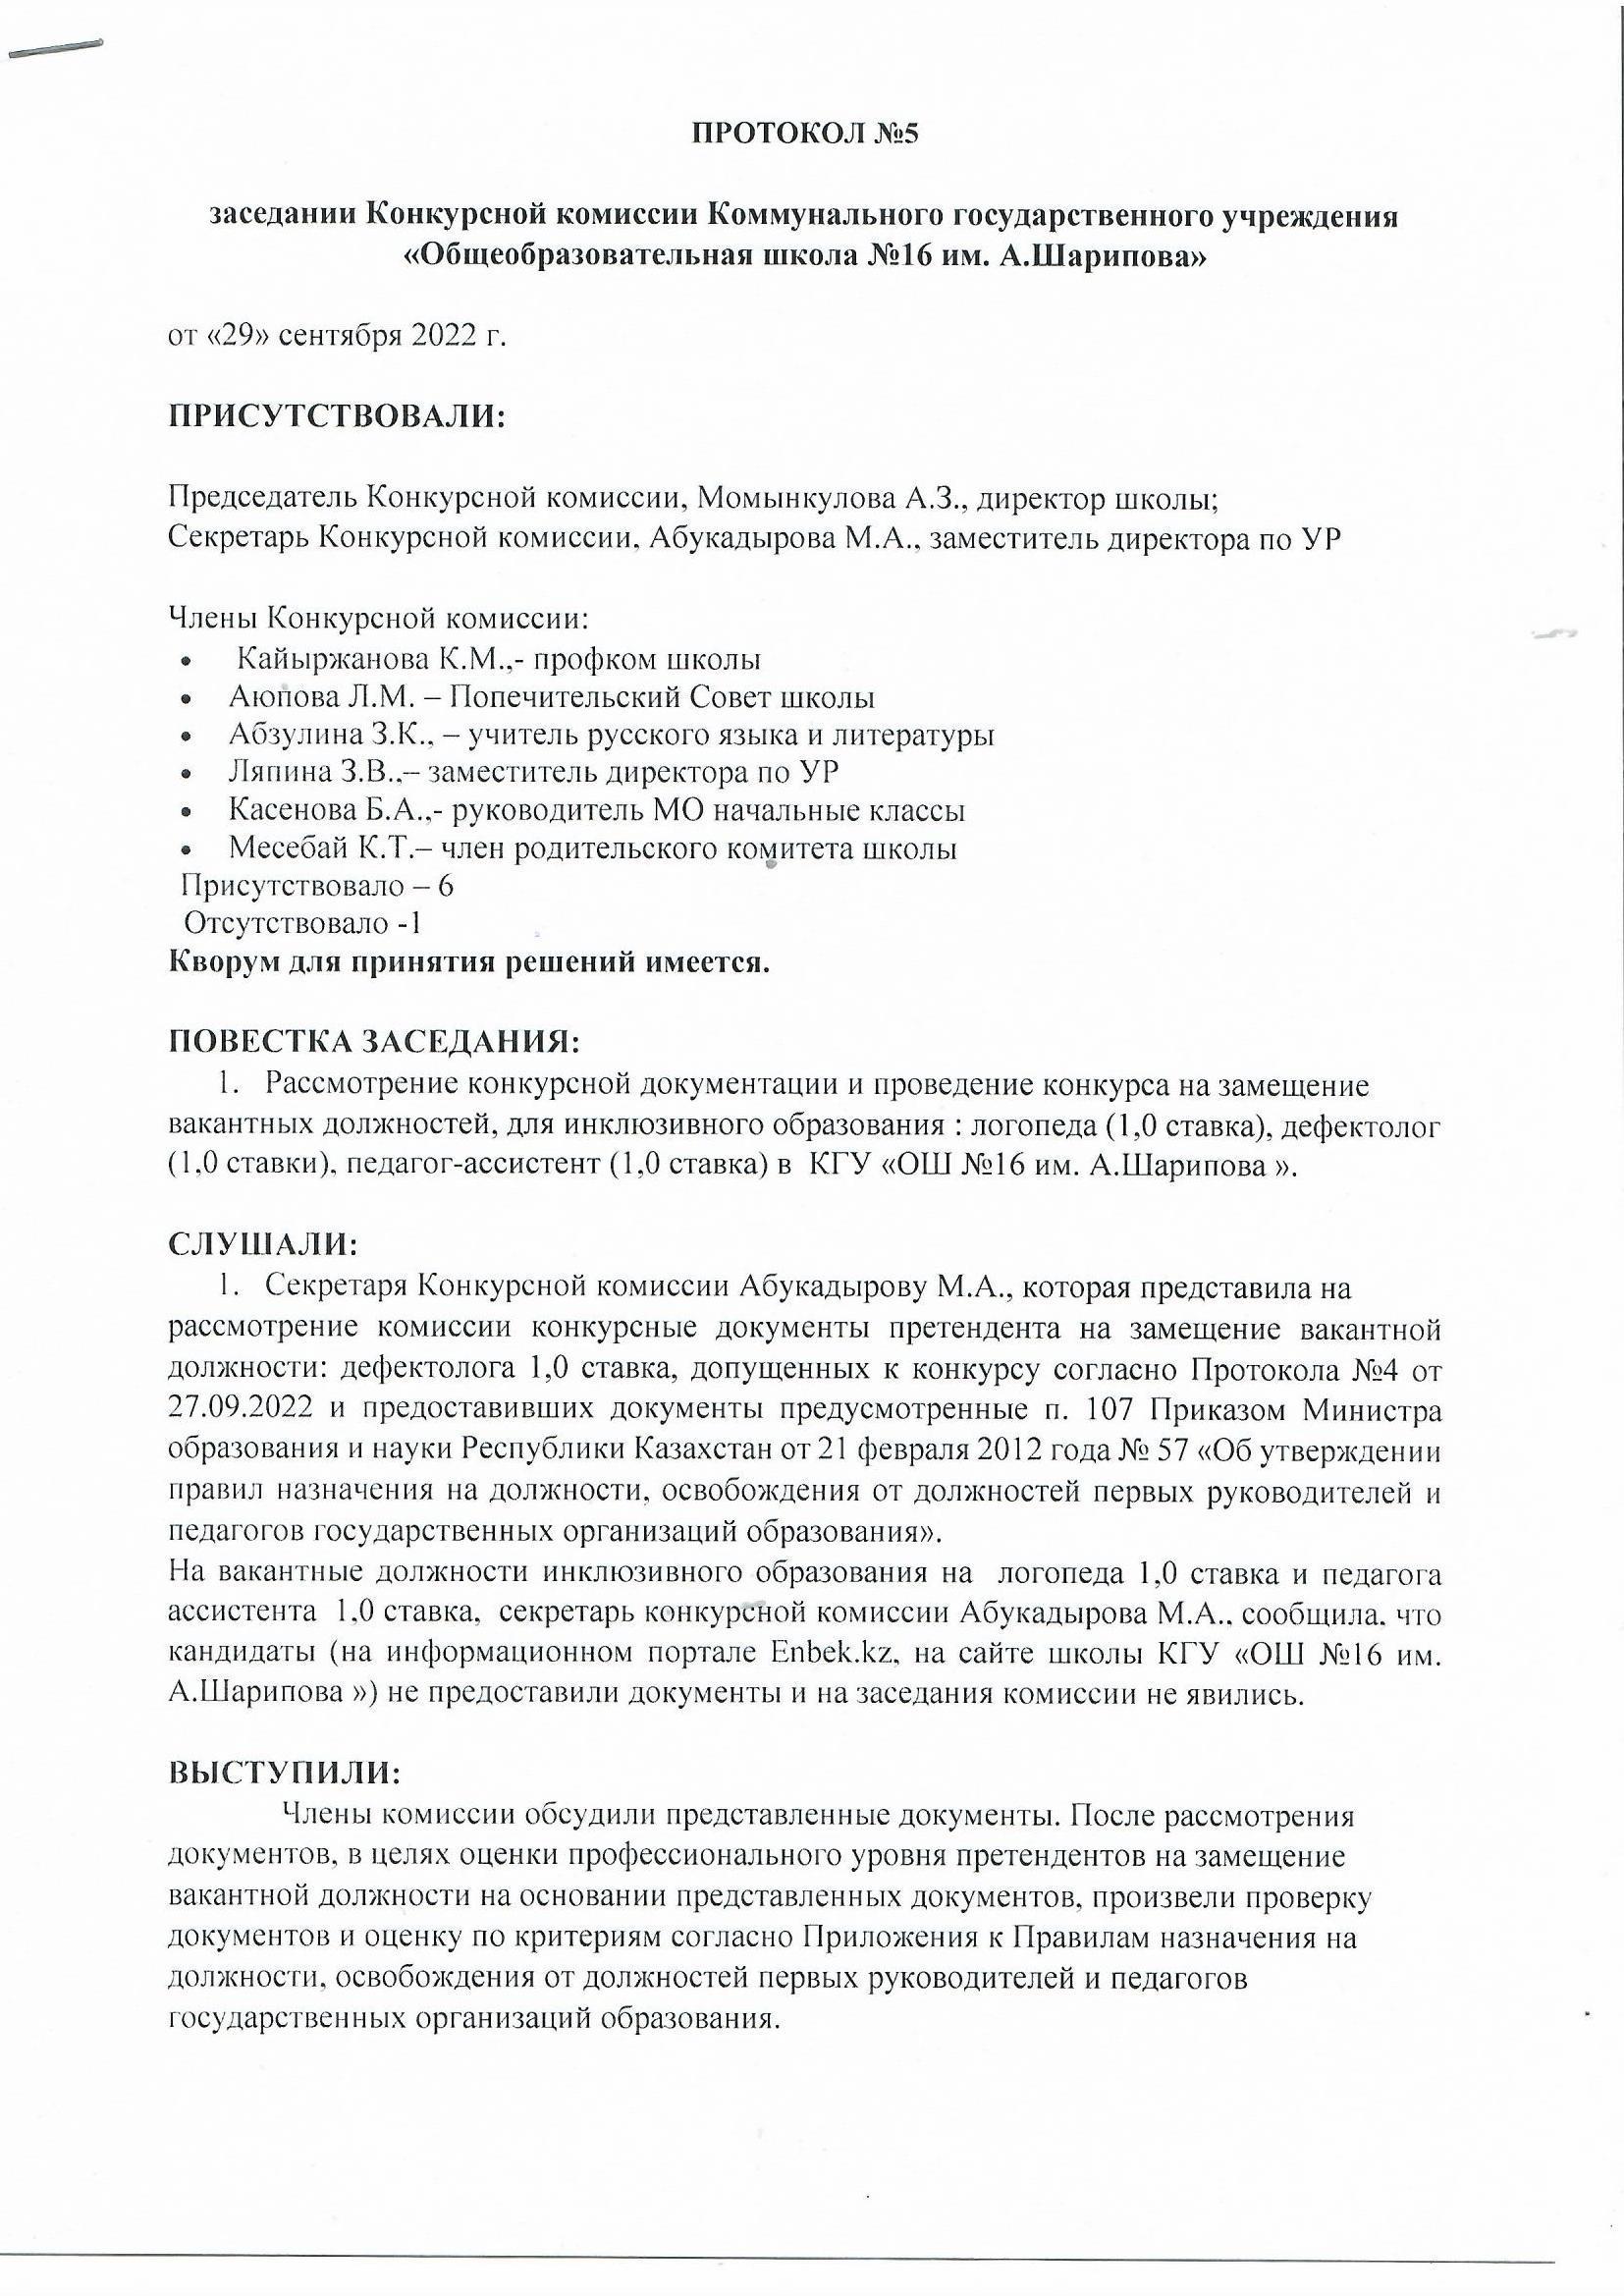 Протокол №5 заседании Конкурсной комиссии КГУ ОШ №16 им.А.Шарипова.